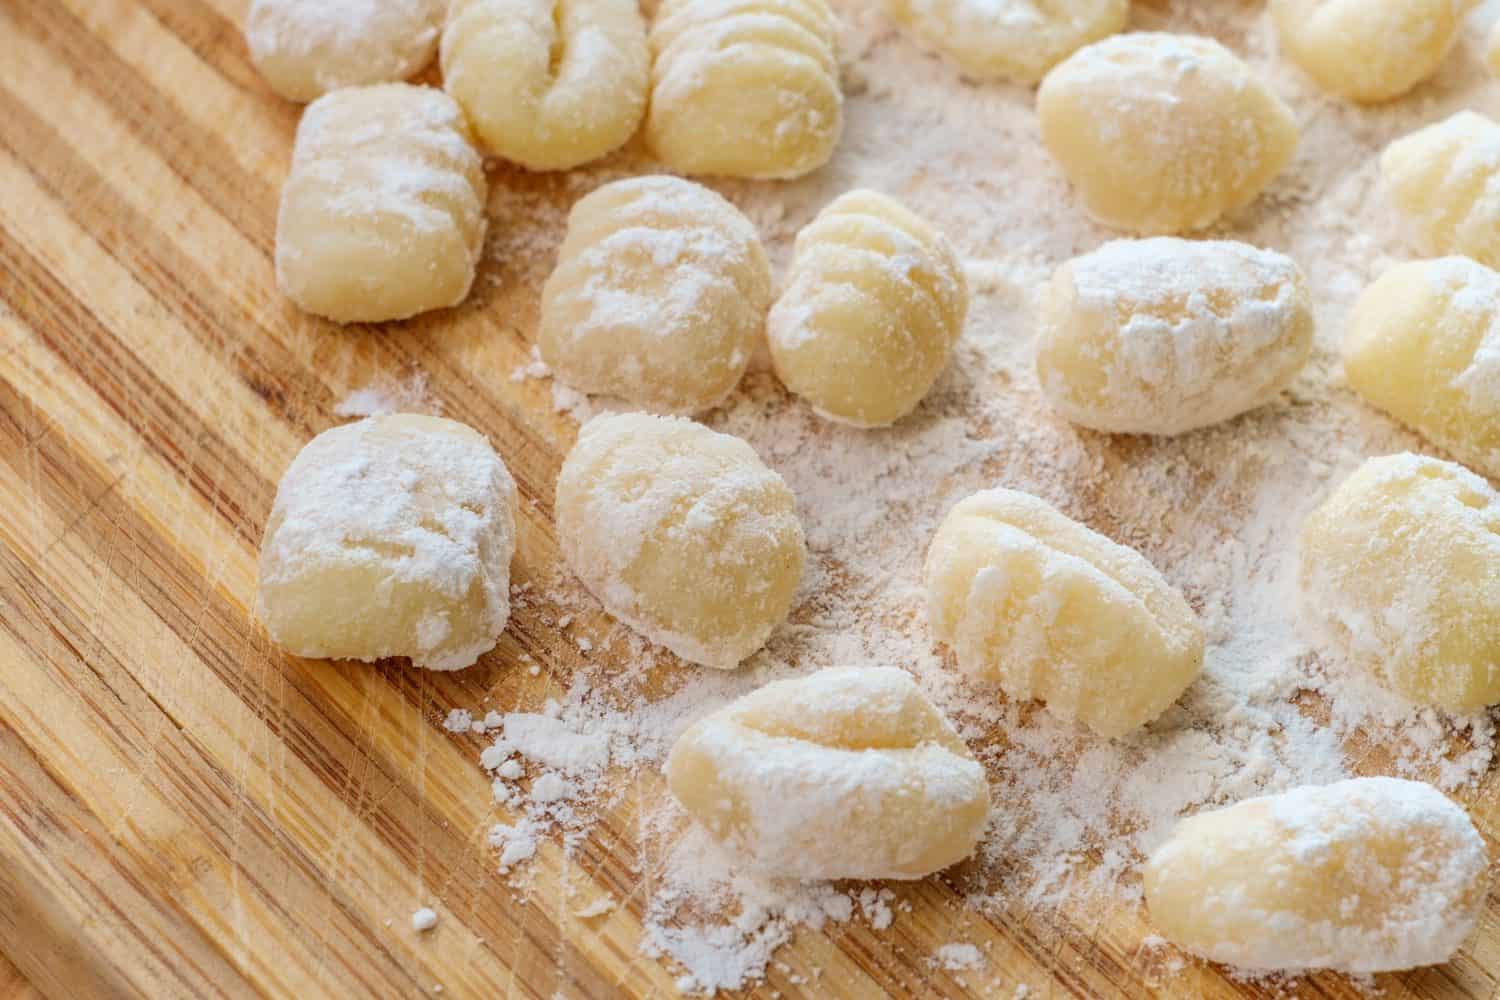 Making homemade Italian potato gnocchi from scratch